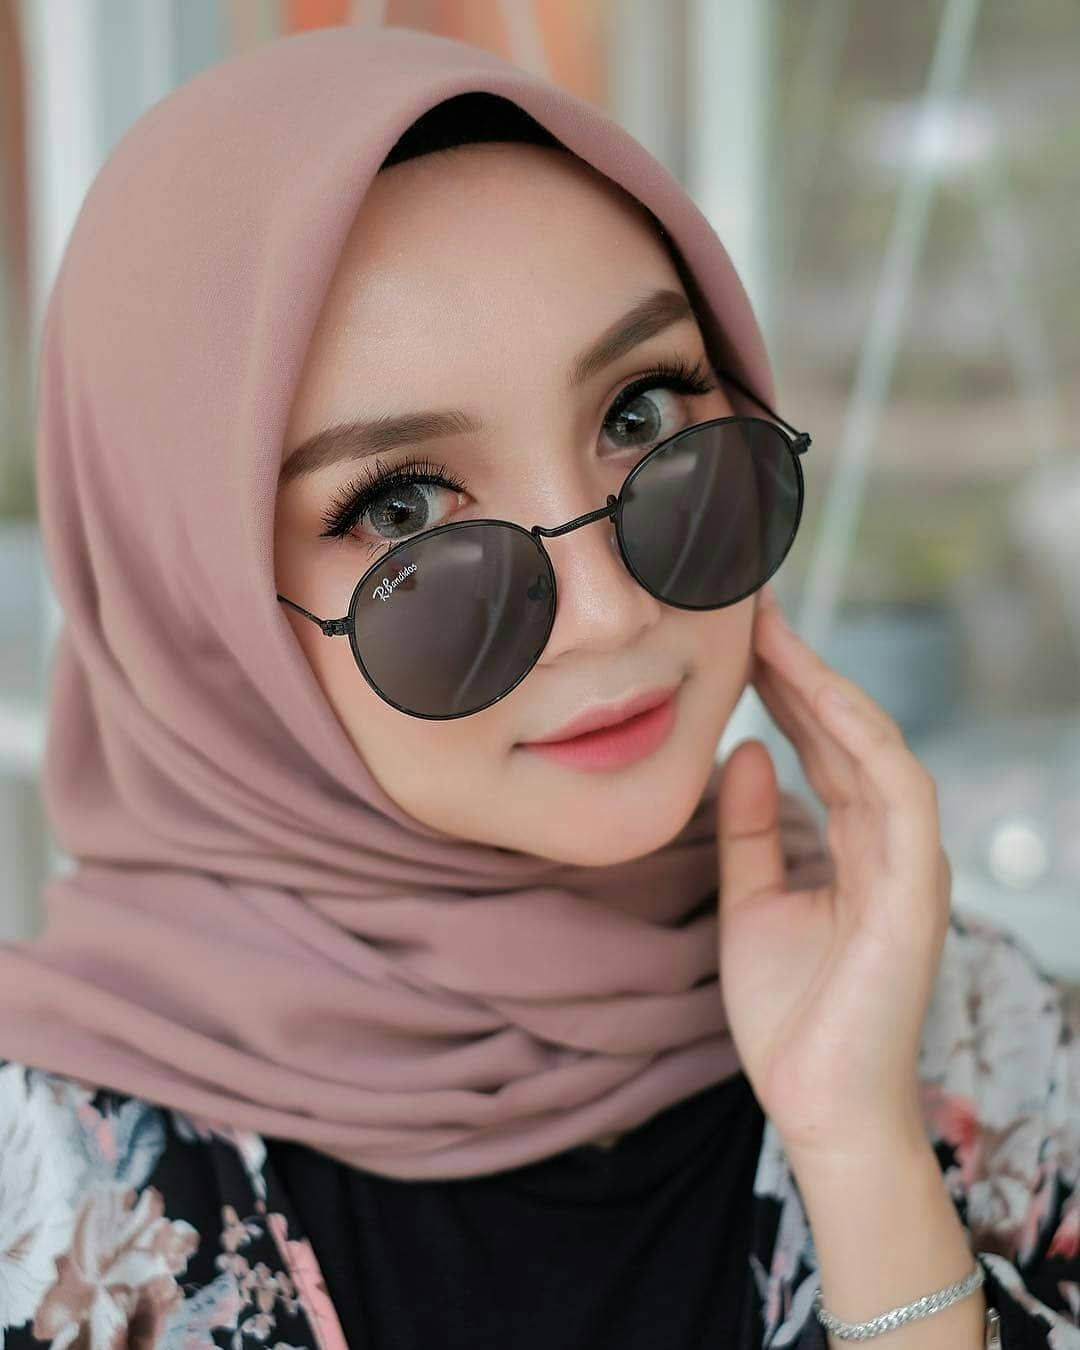 Hijab Girl Sunglasses Background